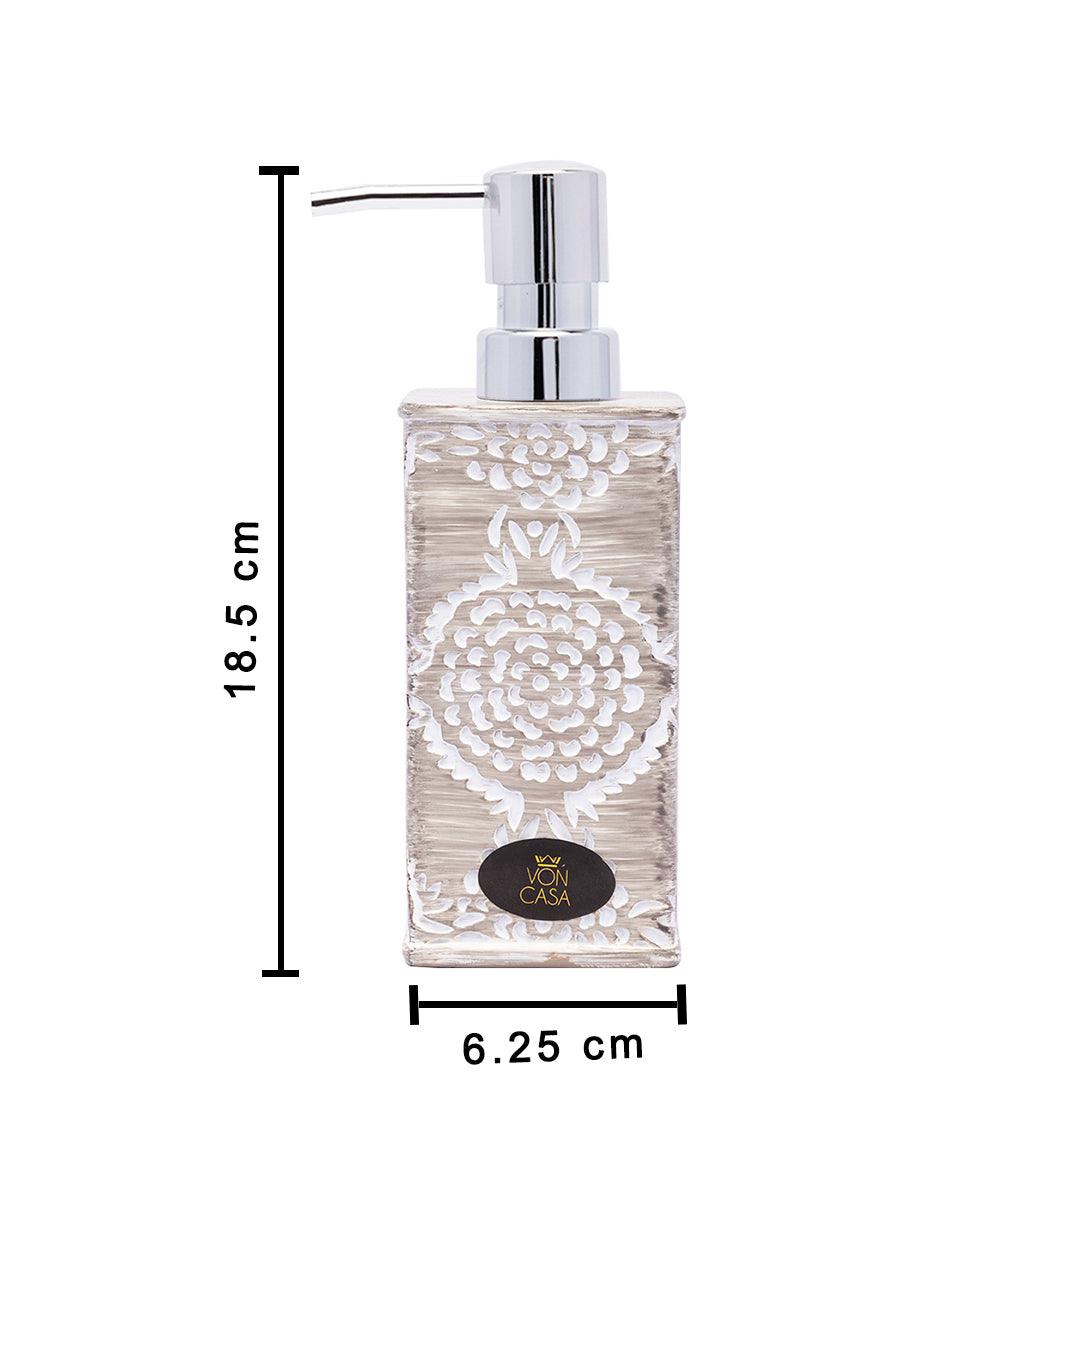 Market99 Traditional Engraved Design Liquid Soap Dispenser- 300 mL - MARKET 99